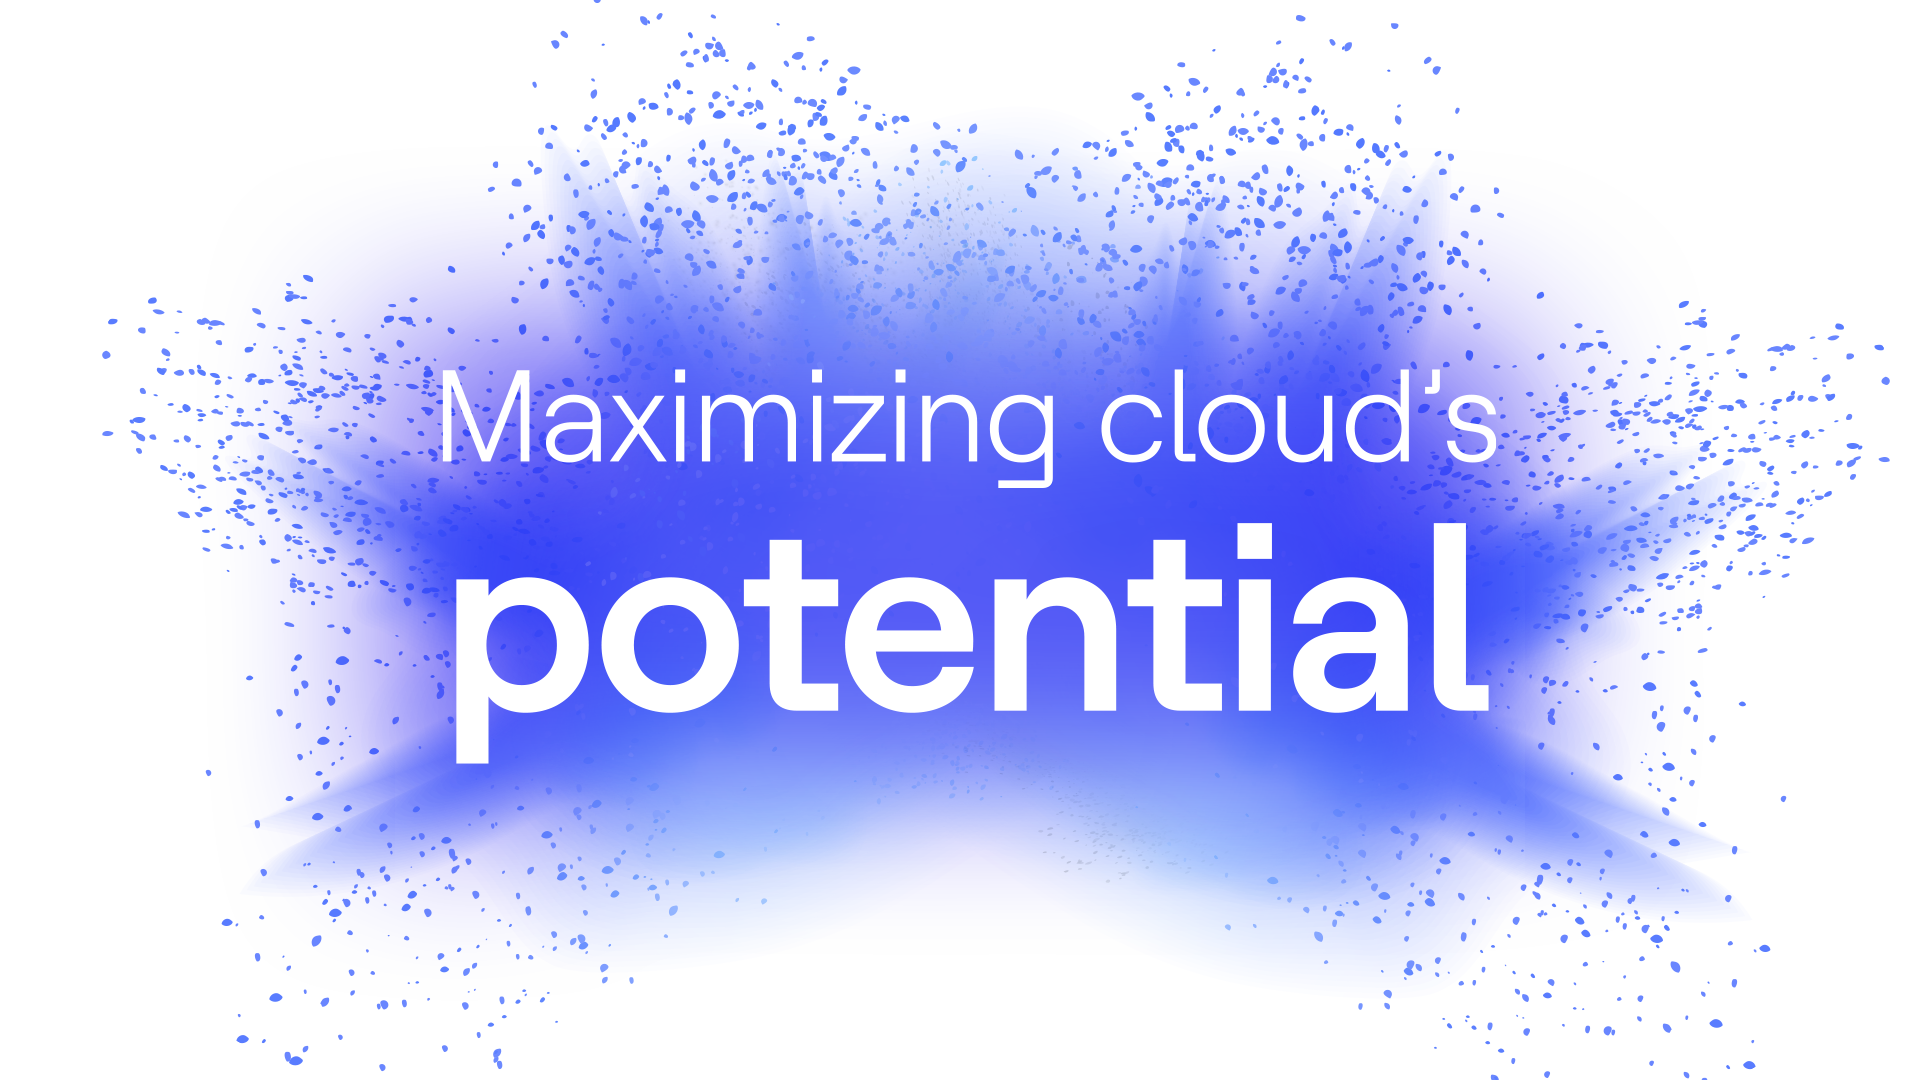 Maximizing cloud's potential